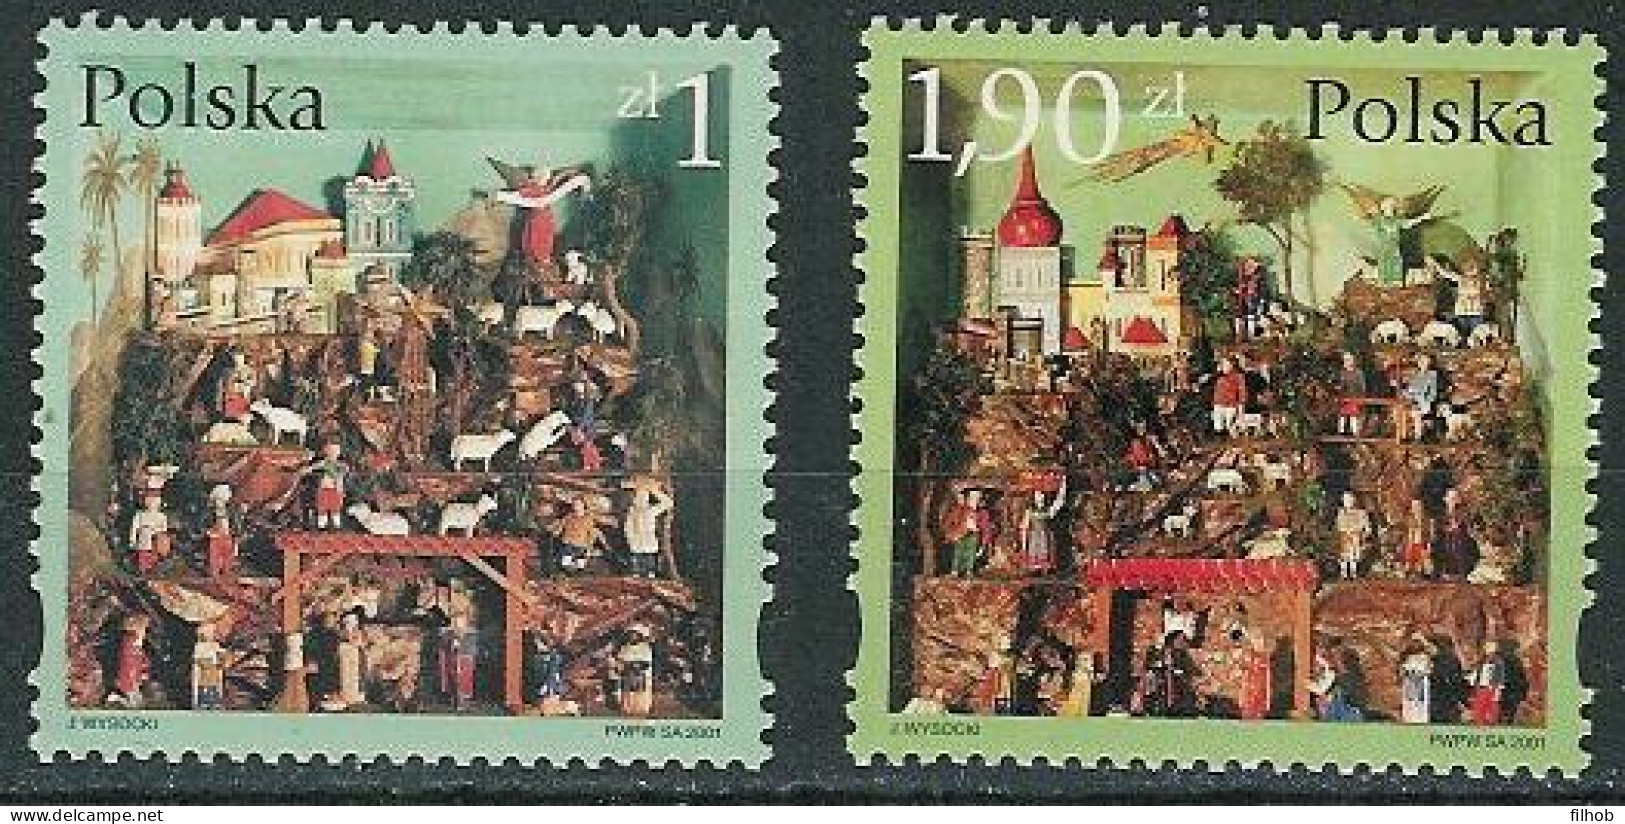 Poland Stamps MNH ZC.3796-97: Christmas (XI) - Ongebruikt